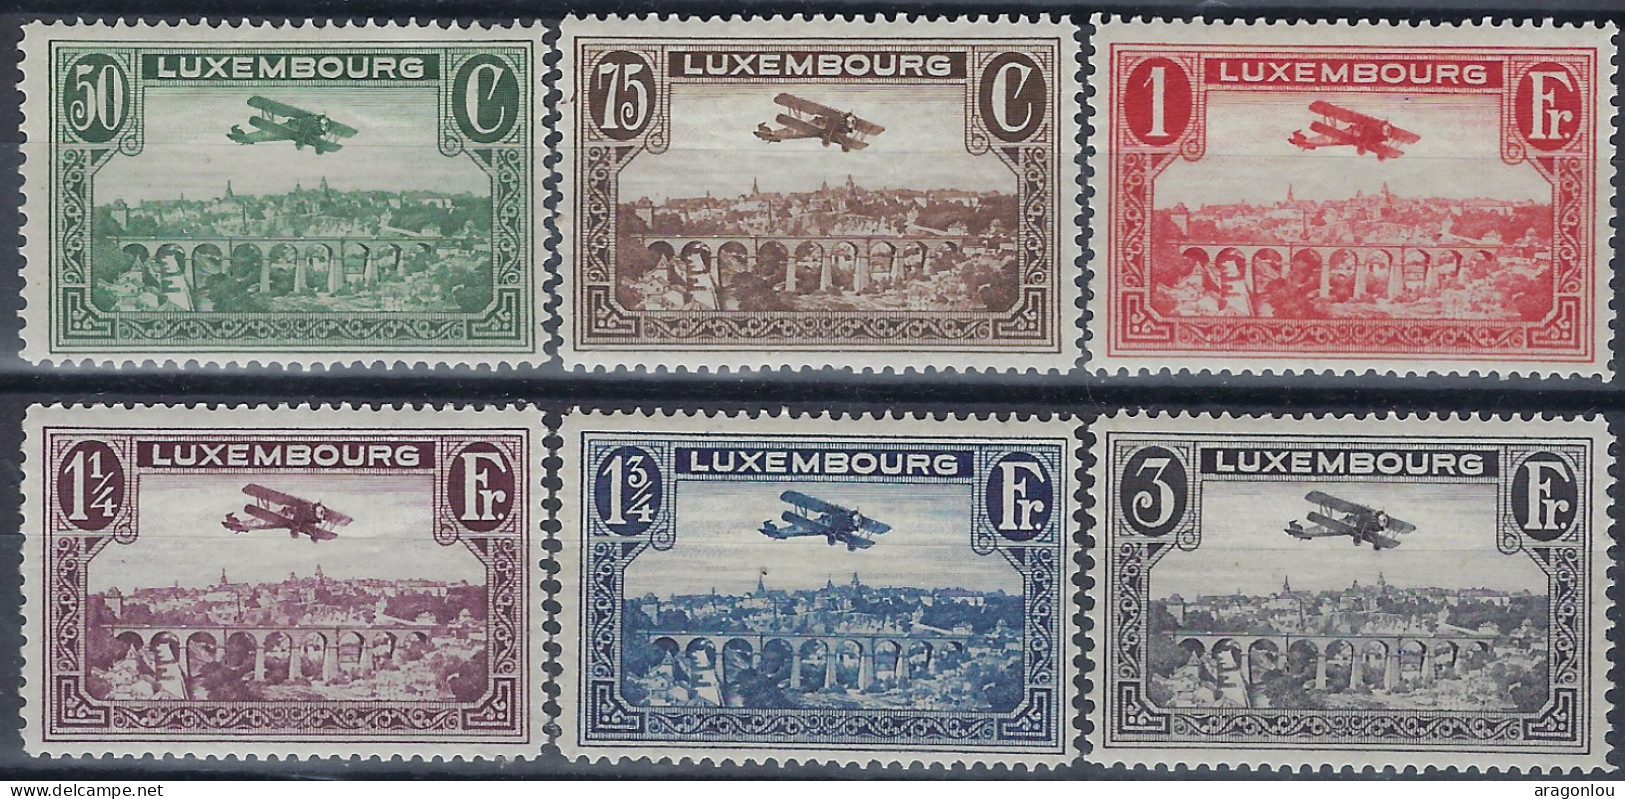 Luxembourg - Luxemburg - Timbres  1931      2 Séries   Biplan  Breguet     MNH** - Nuevos